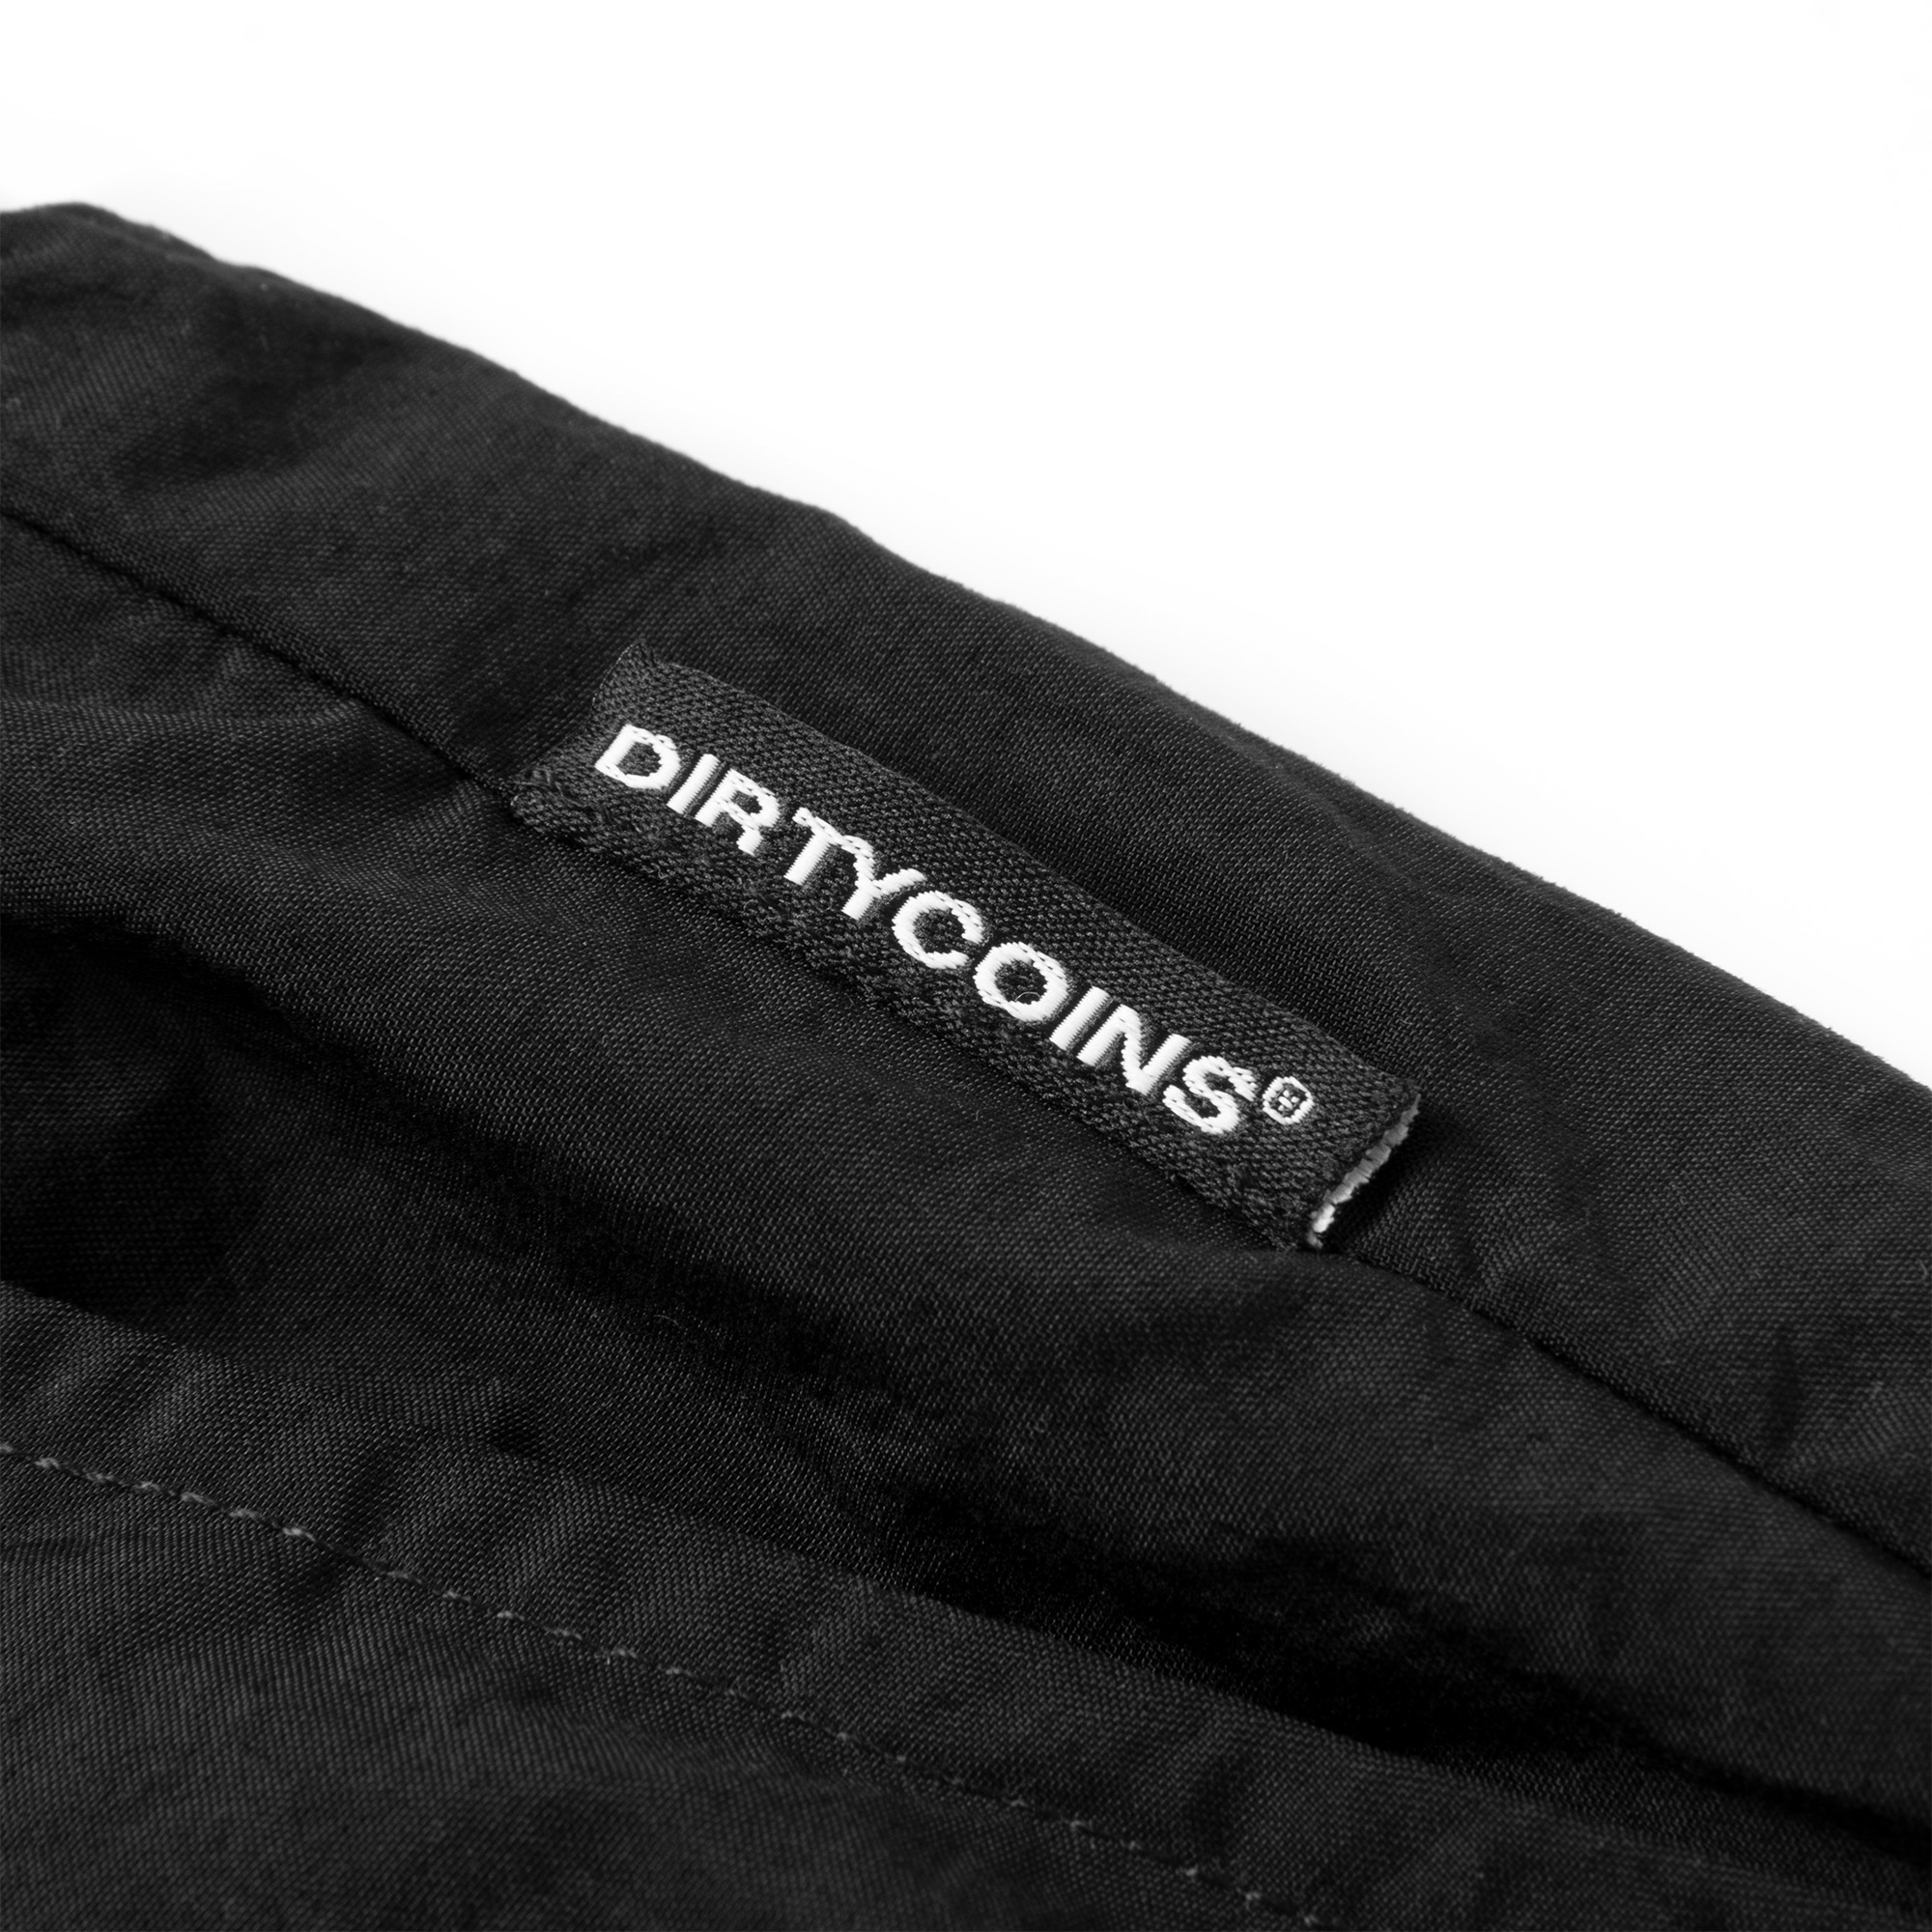 Quần Dico Comfy Cargo Shorts - Black